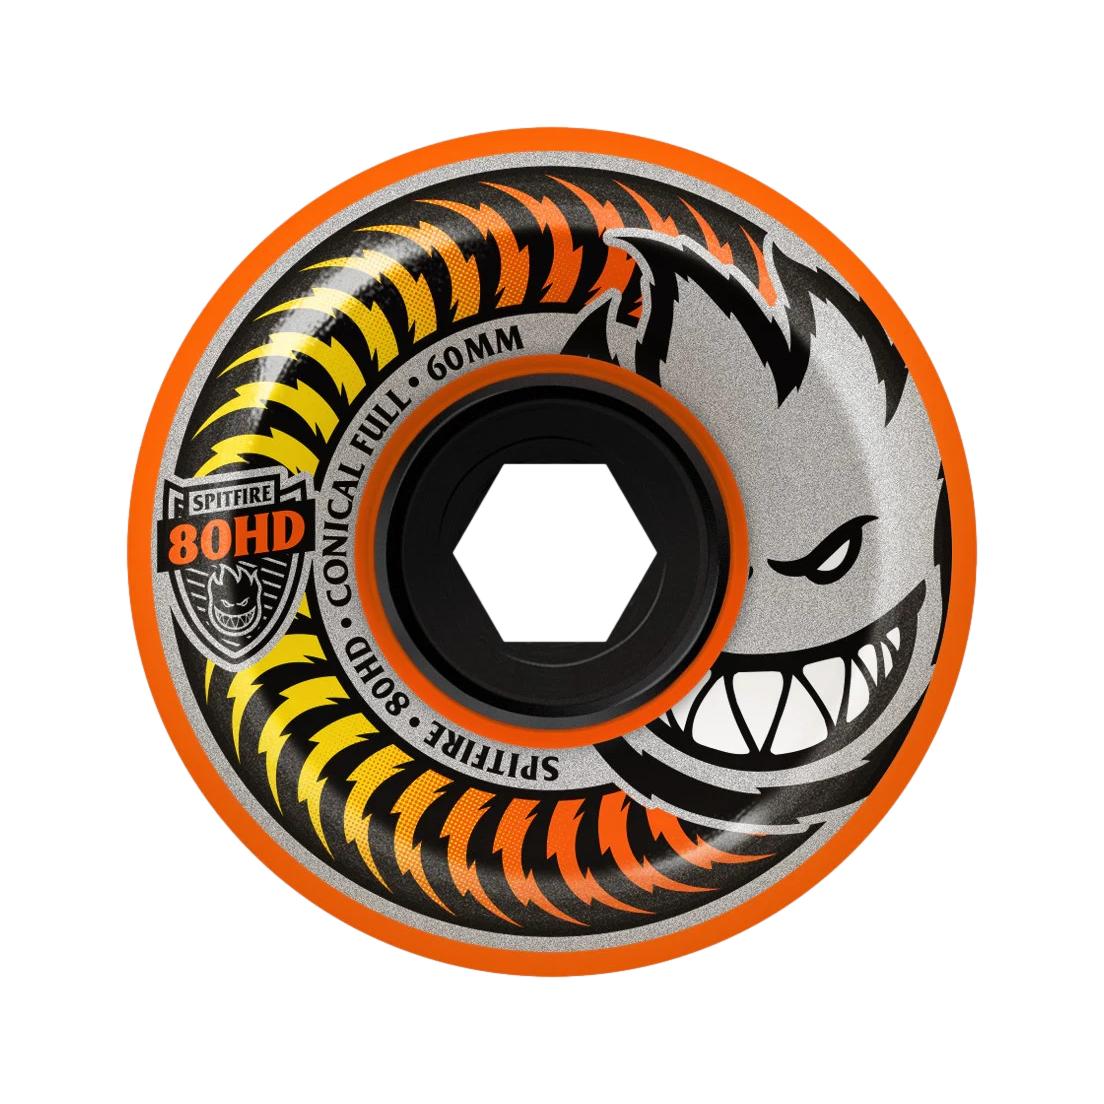 SF 80HD Conical  Full Fade Orange 60mm Wheels - Venue Skateboards